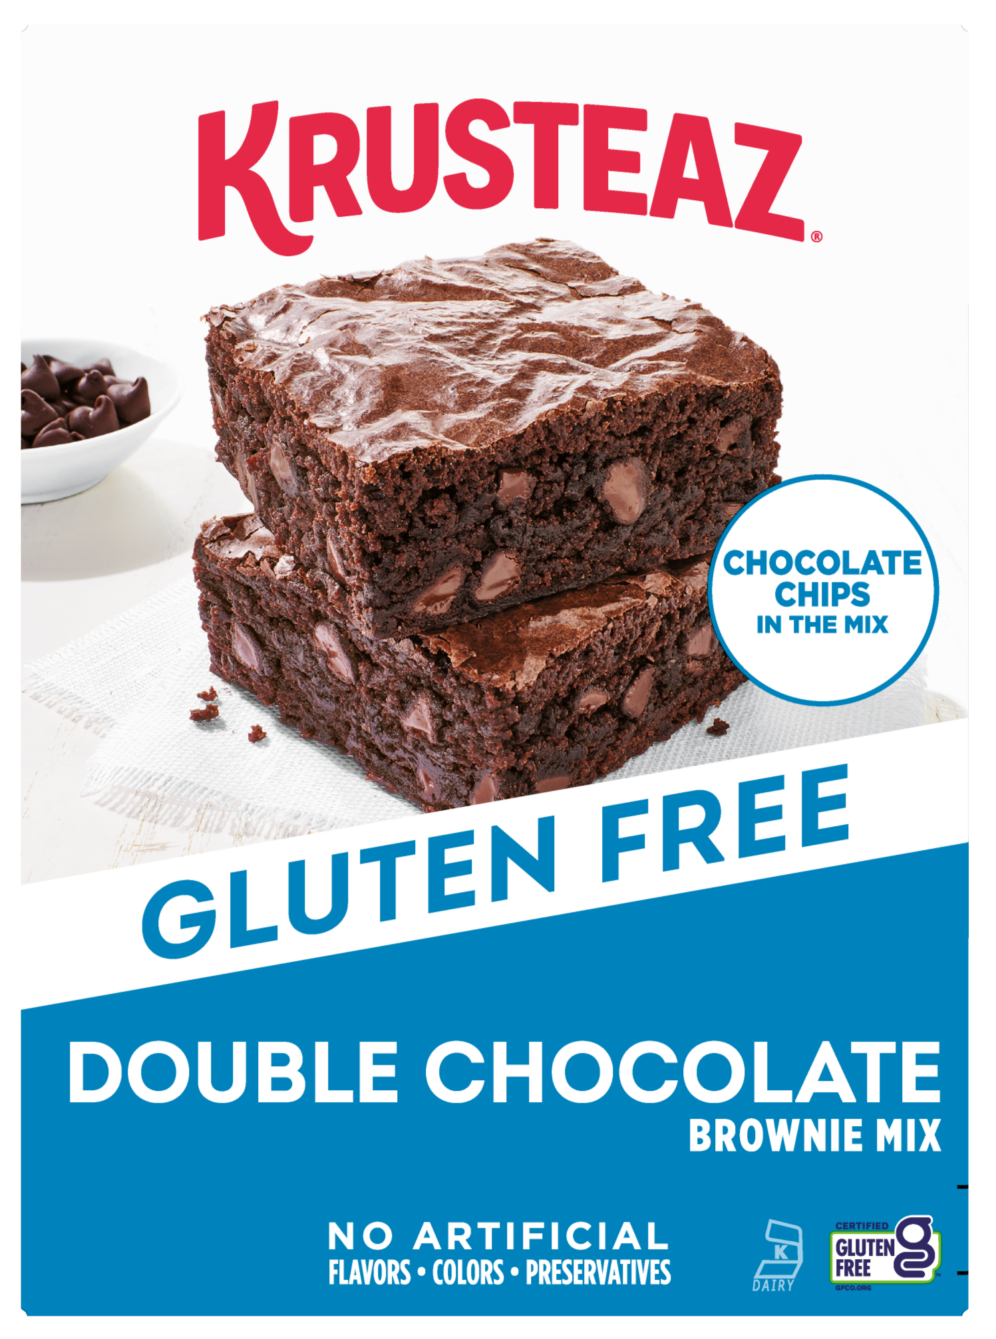 Box of Krusteaz Gluten Free Double Chocolate Brownie Mix.